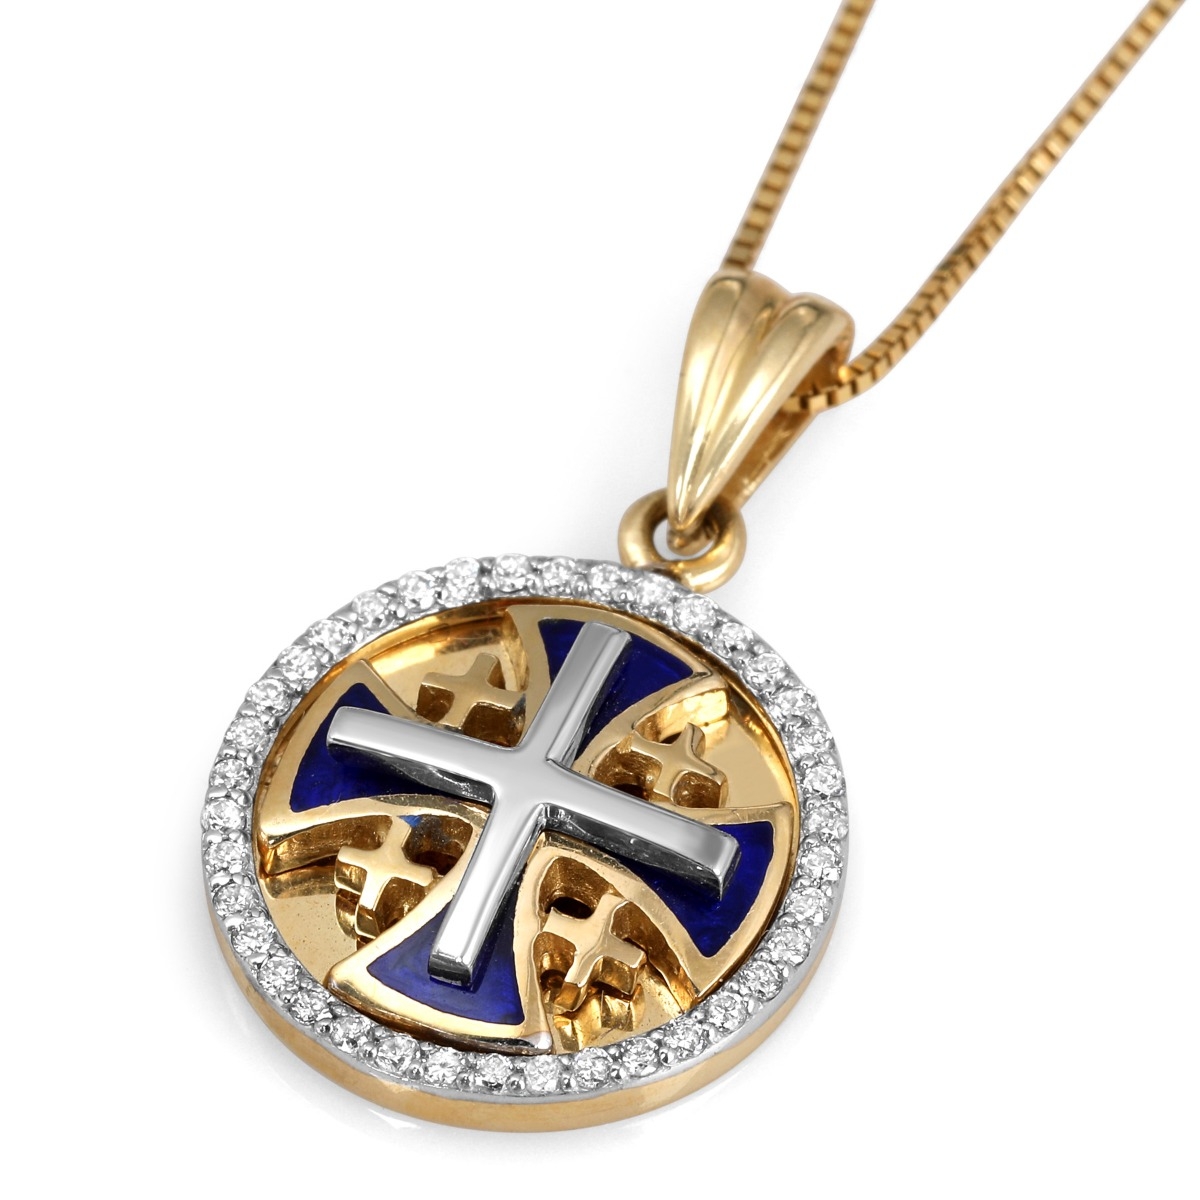 Anbinder Jewelry 14K Gold Two-Tone Circle Jerusalem Cross Pendant with Enamel and 38 Diamond Border - 1